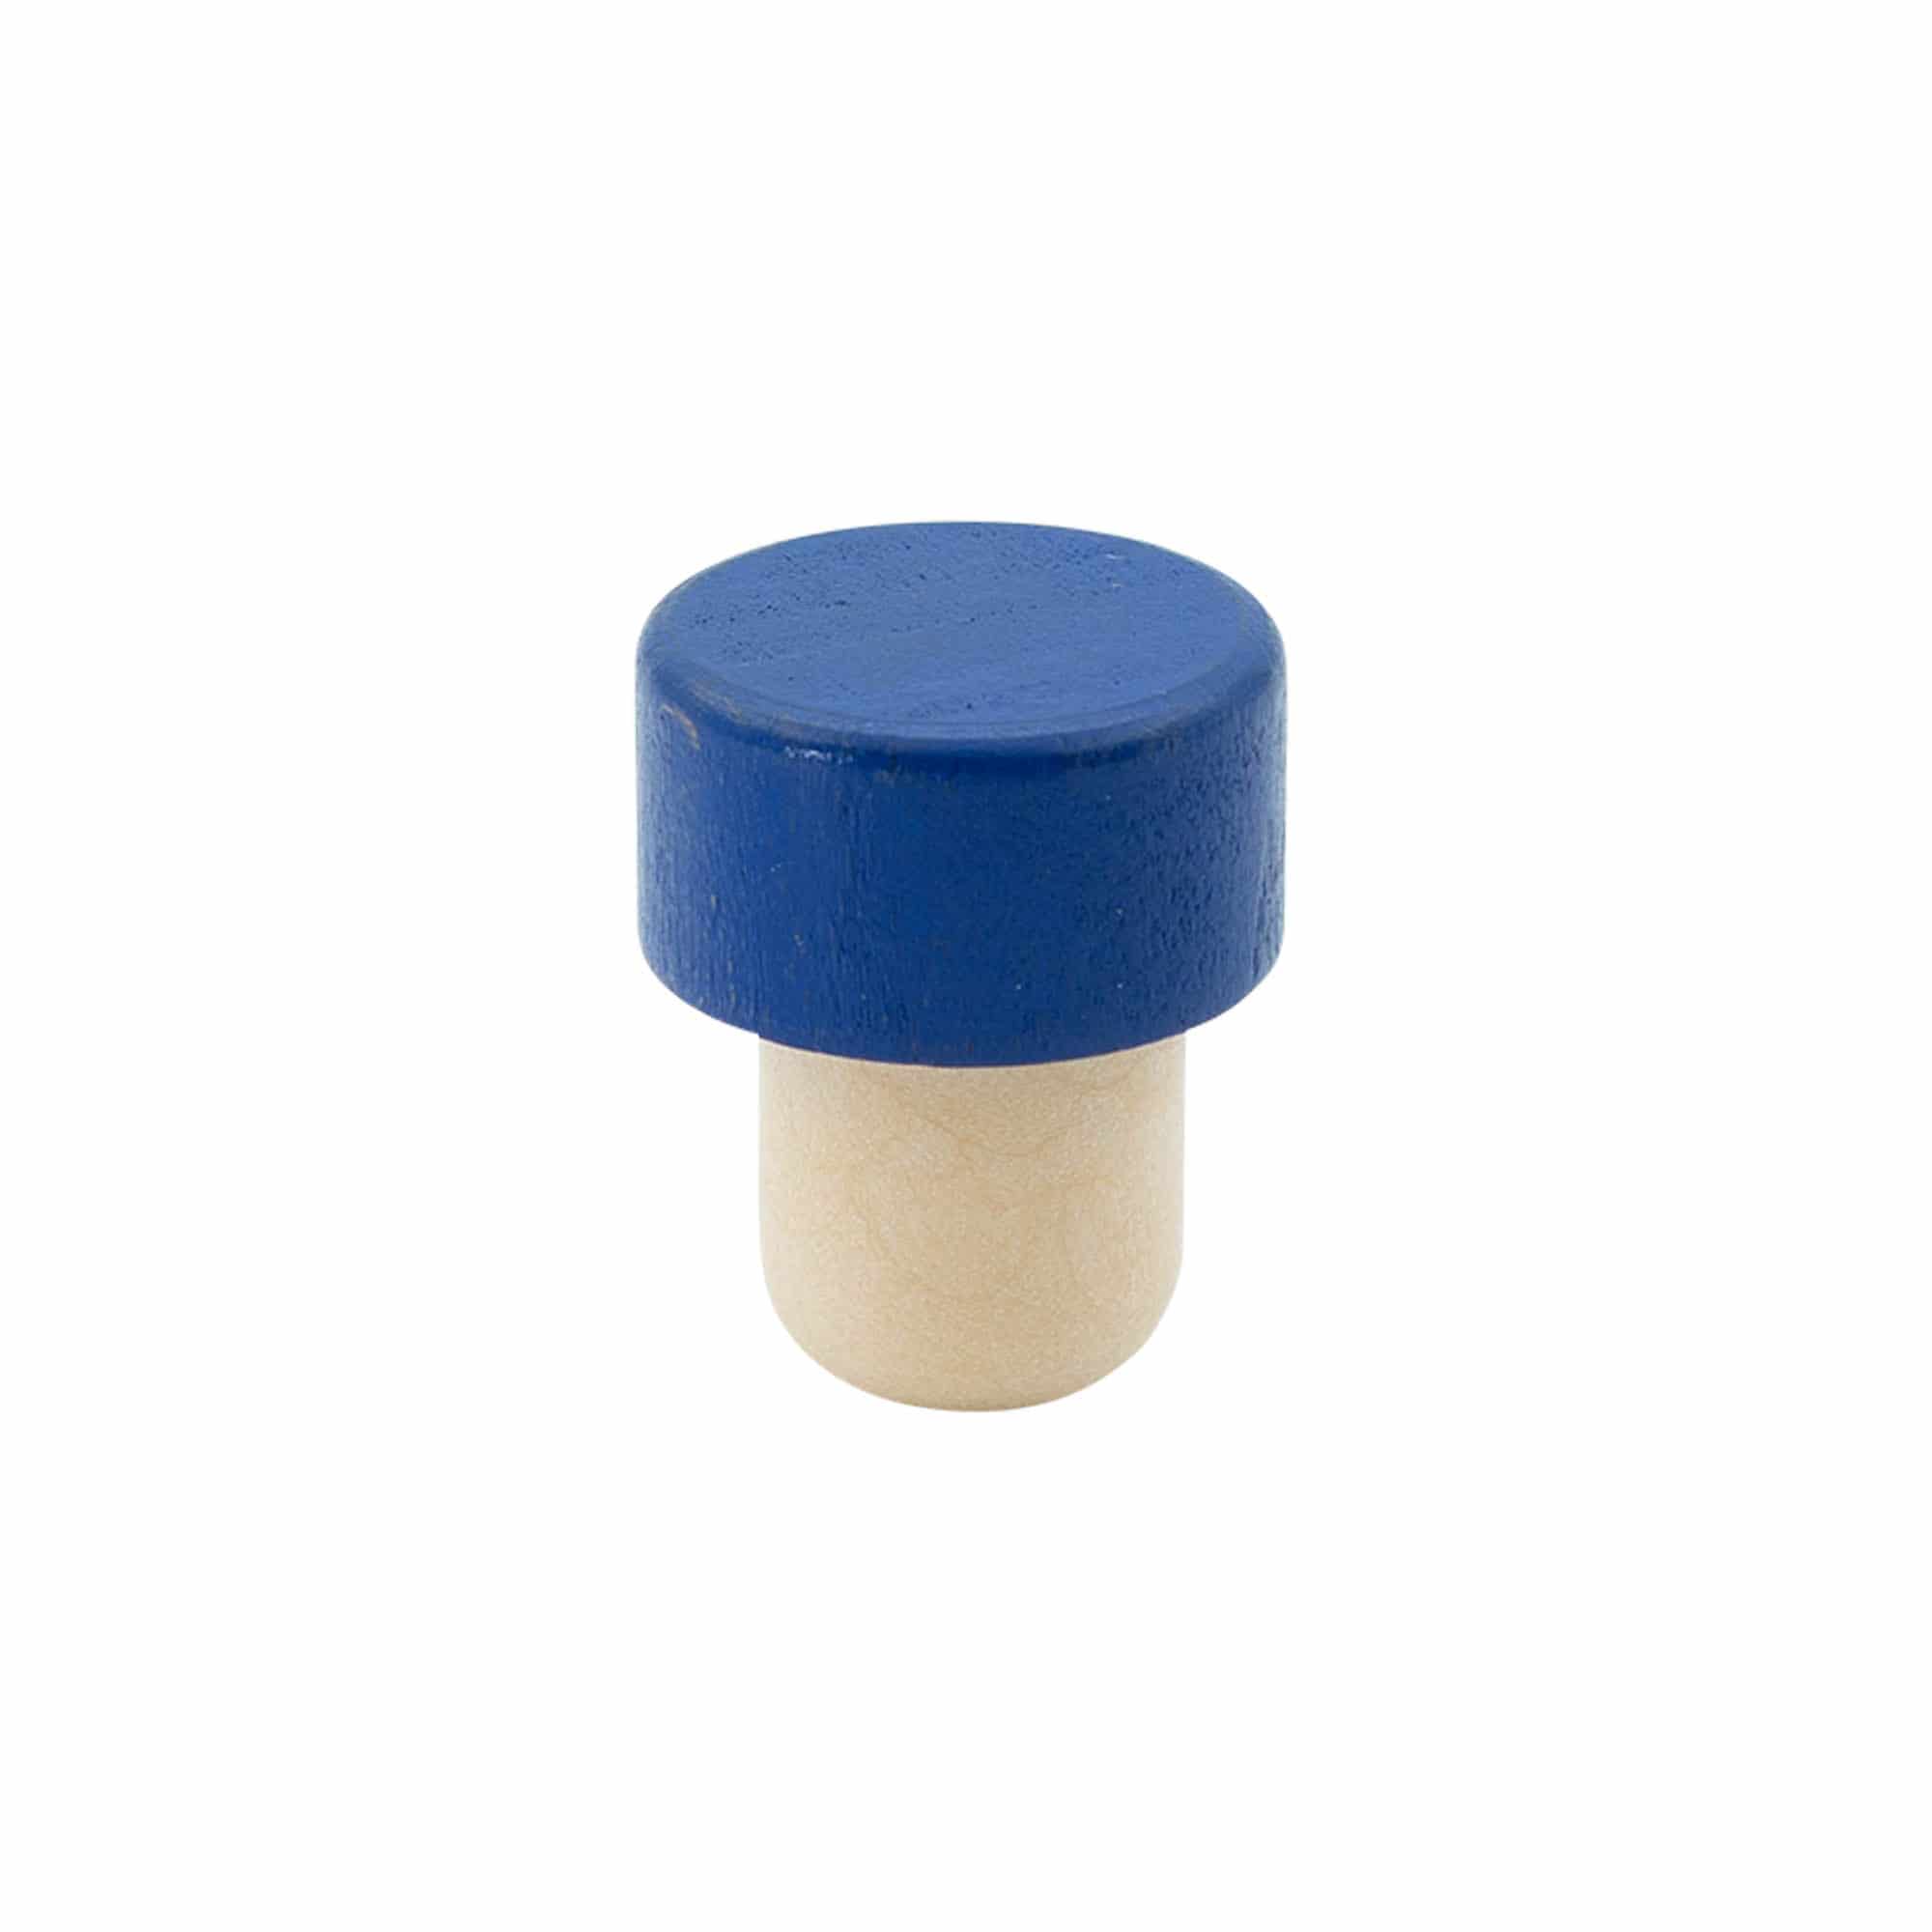 19 mm mushroom cork, wood, blue, for opening: cork